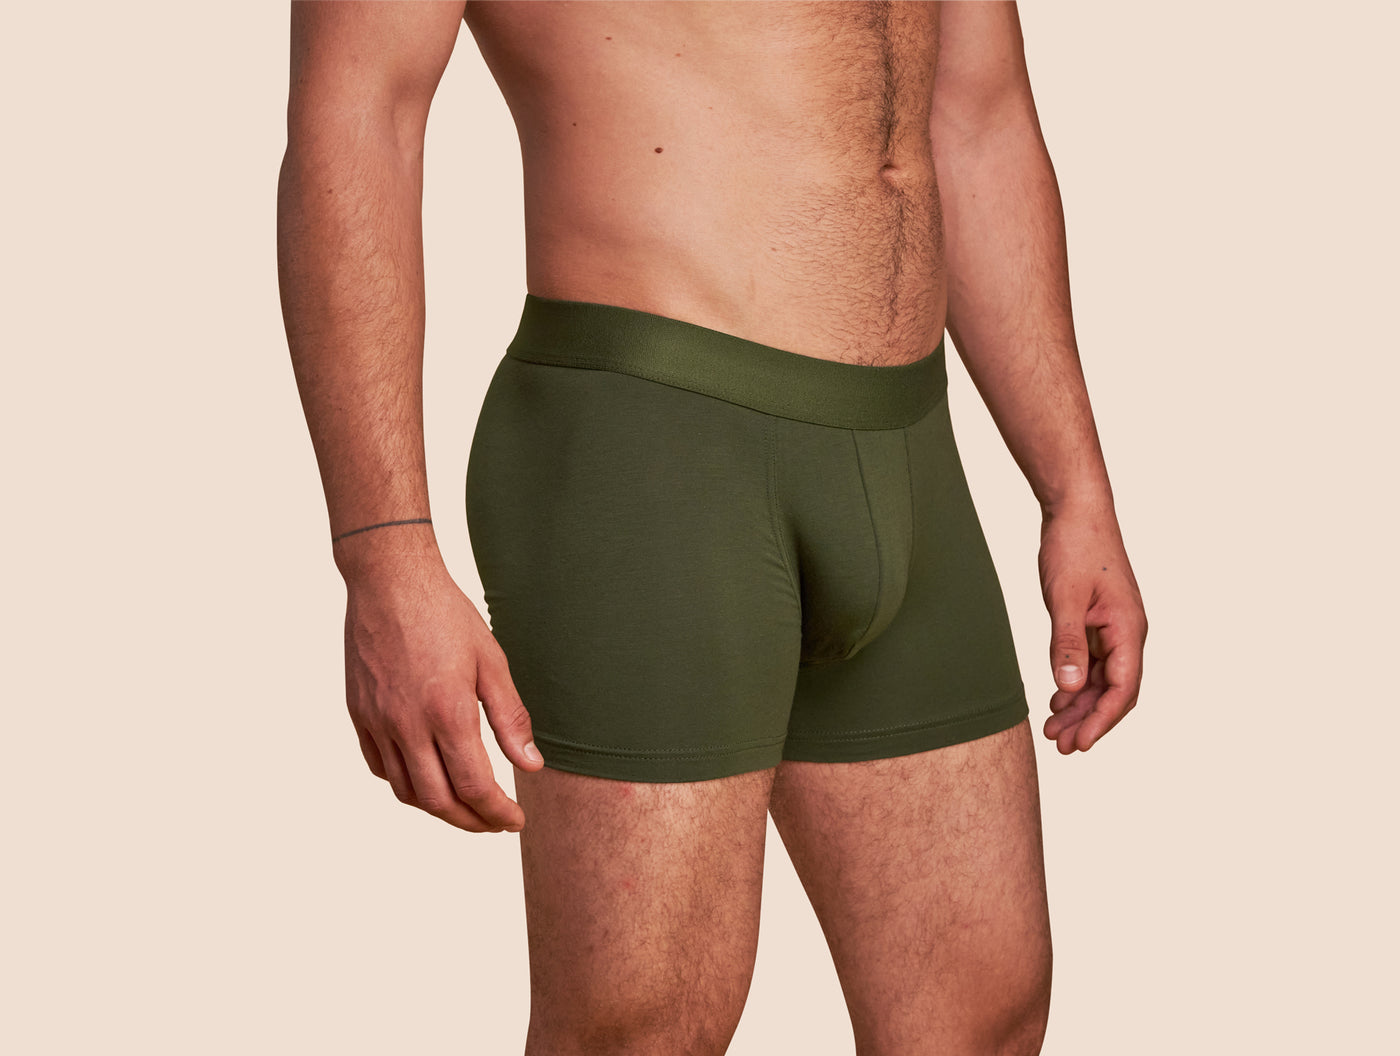 Pétrone boxer confort coton pima micromodal vert kaki homme#couleur_vert-kaki